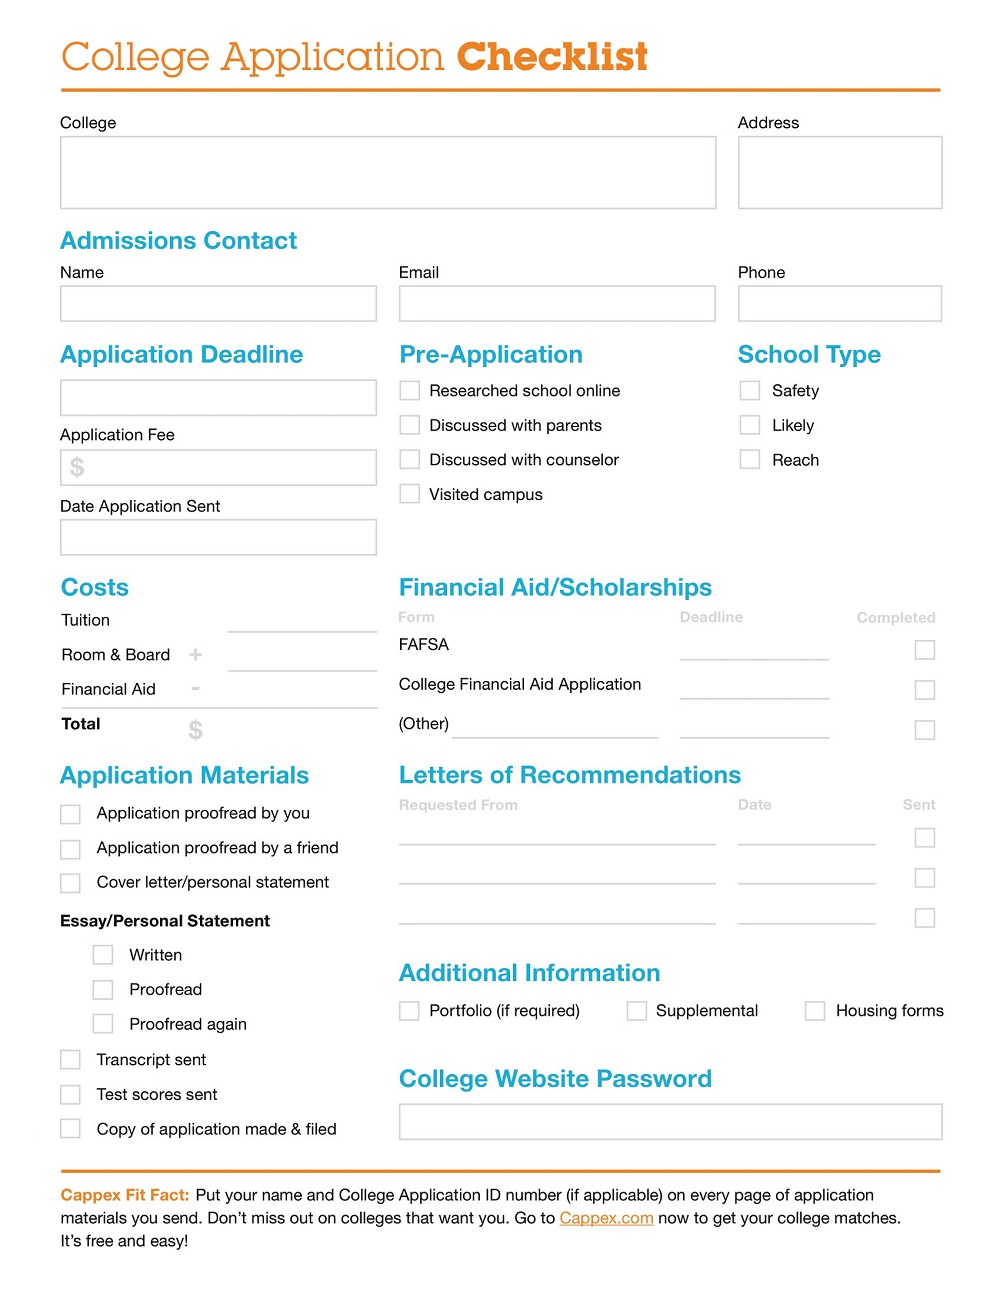 Sample College Application Checklist